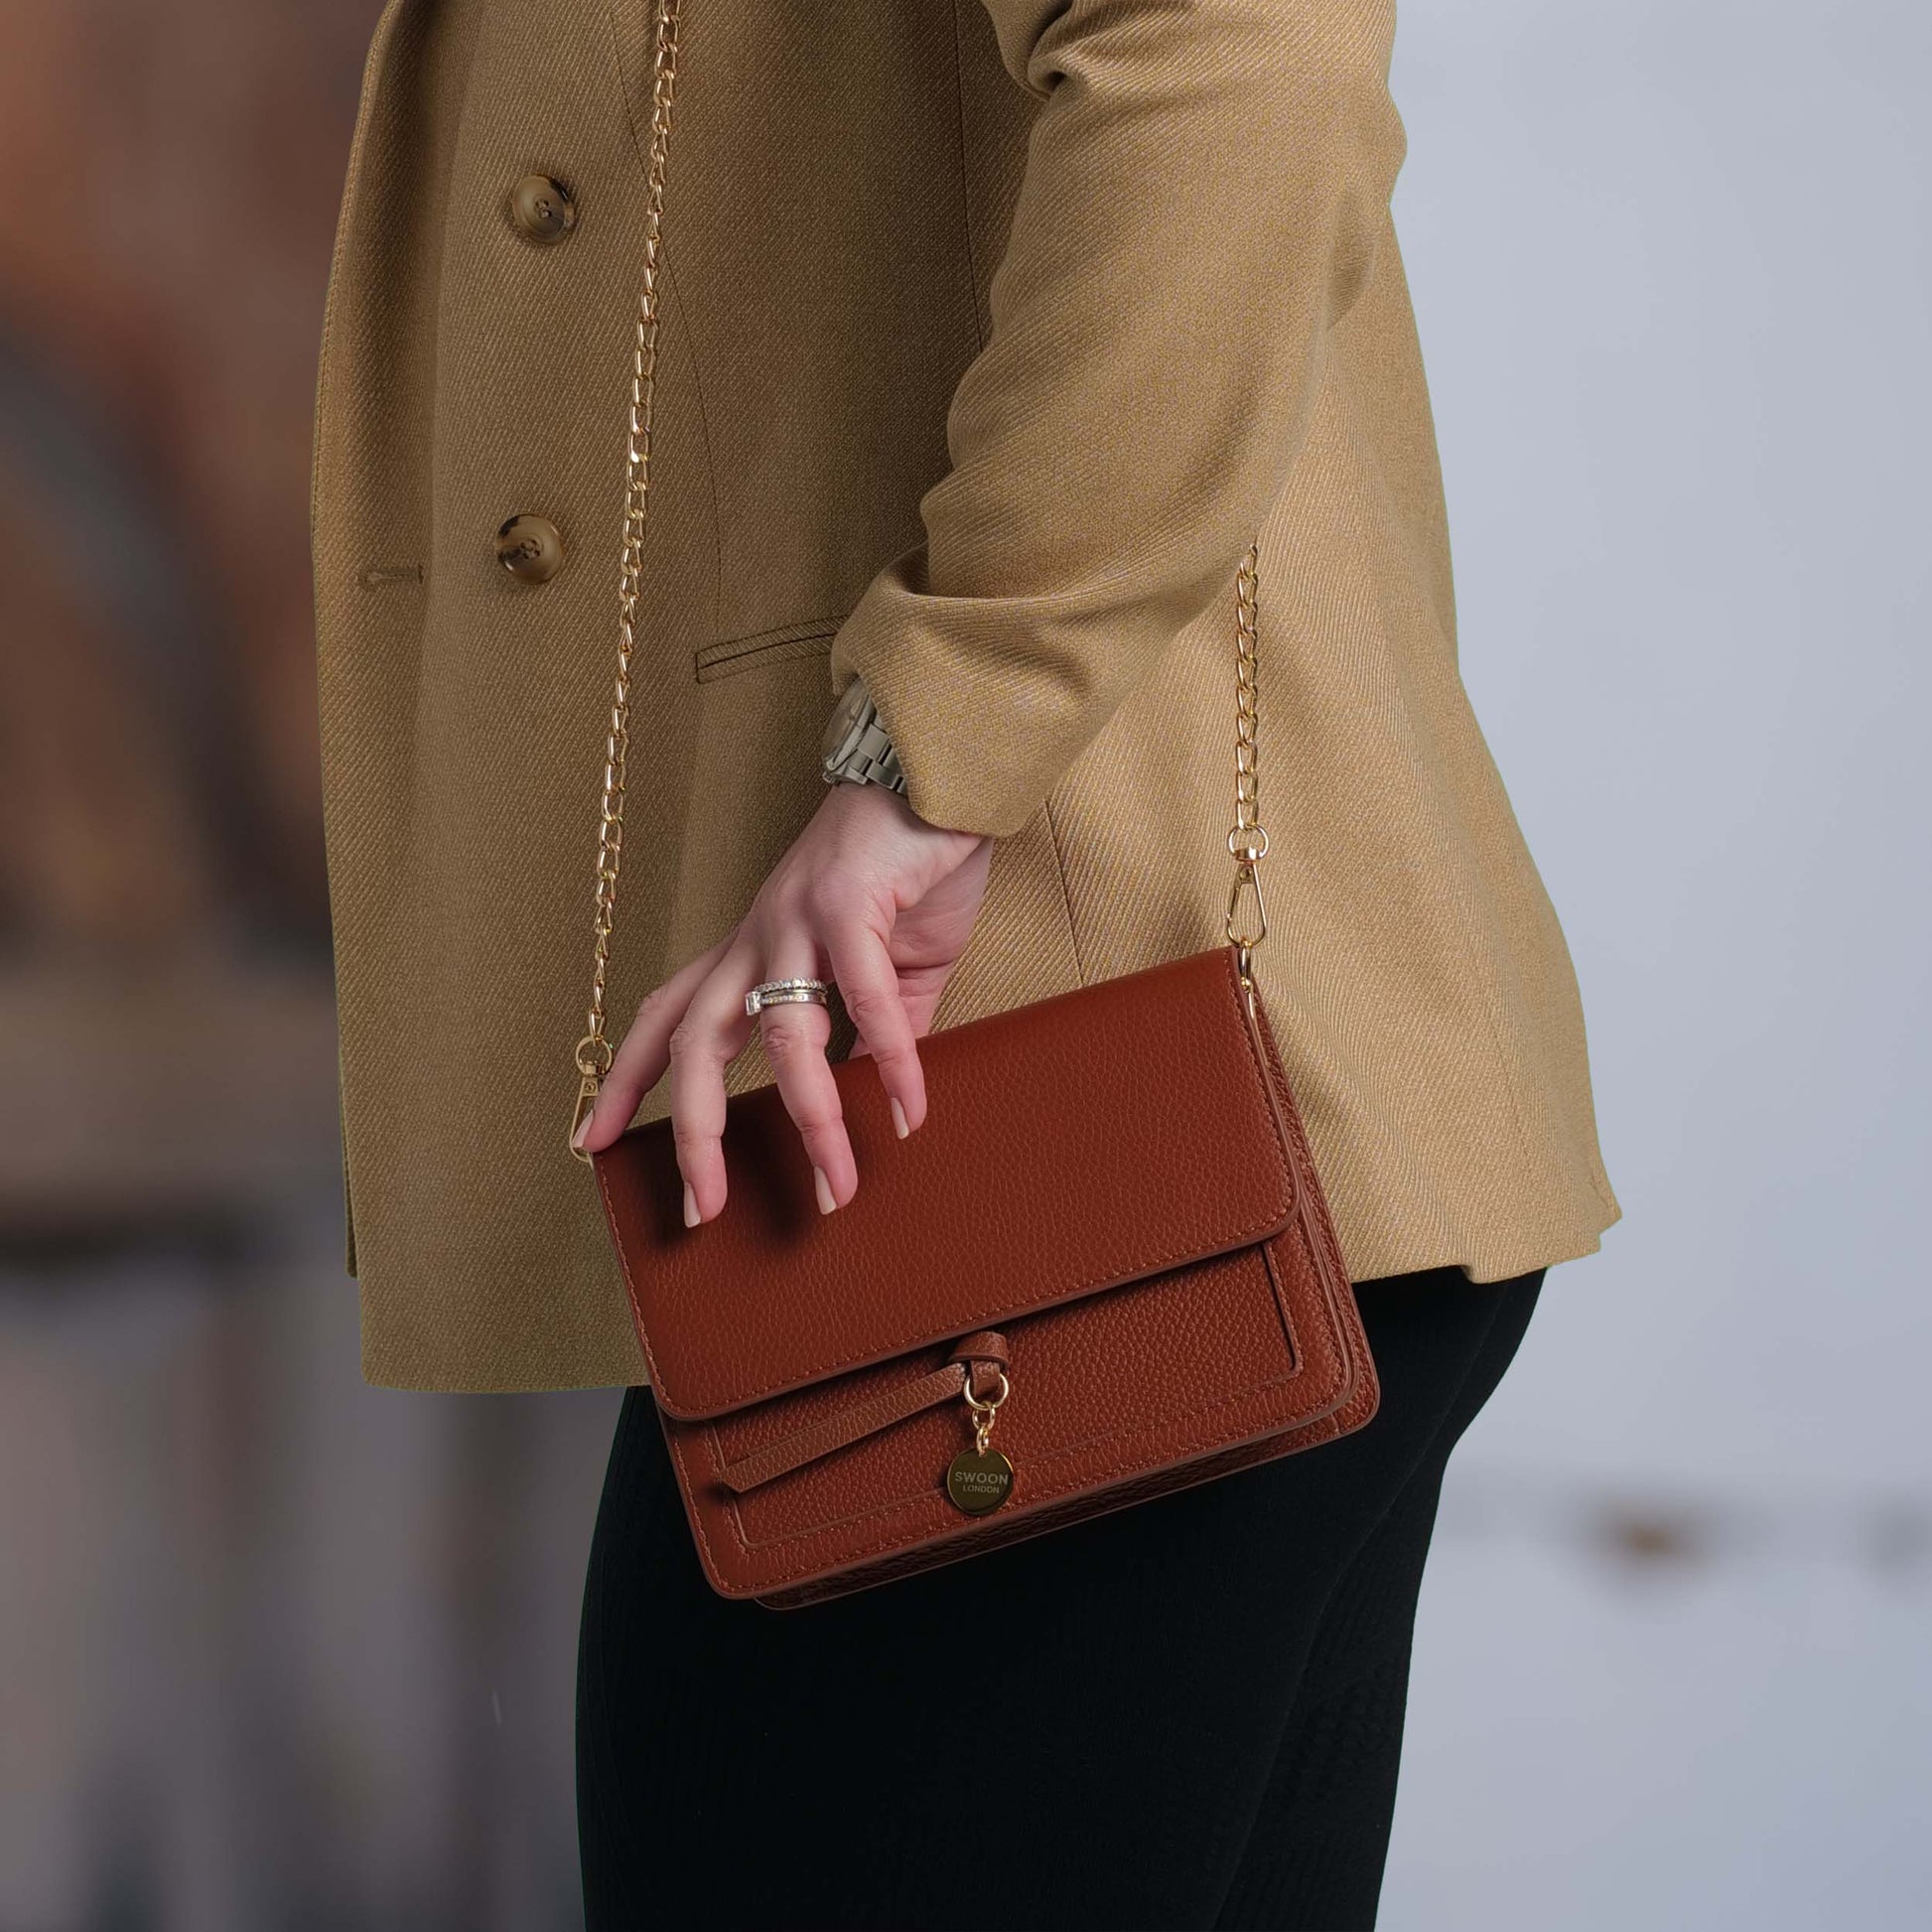 Harlan Leather Crossbody Bag in Tuscan Tan by Swoon London